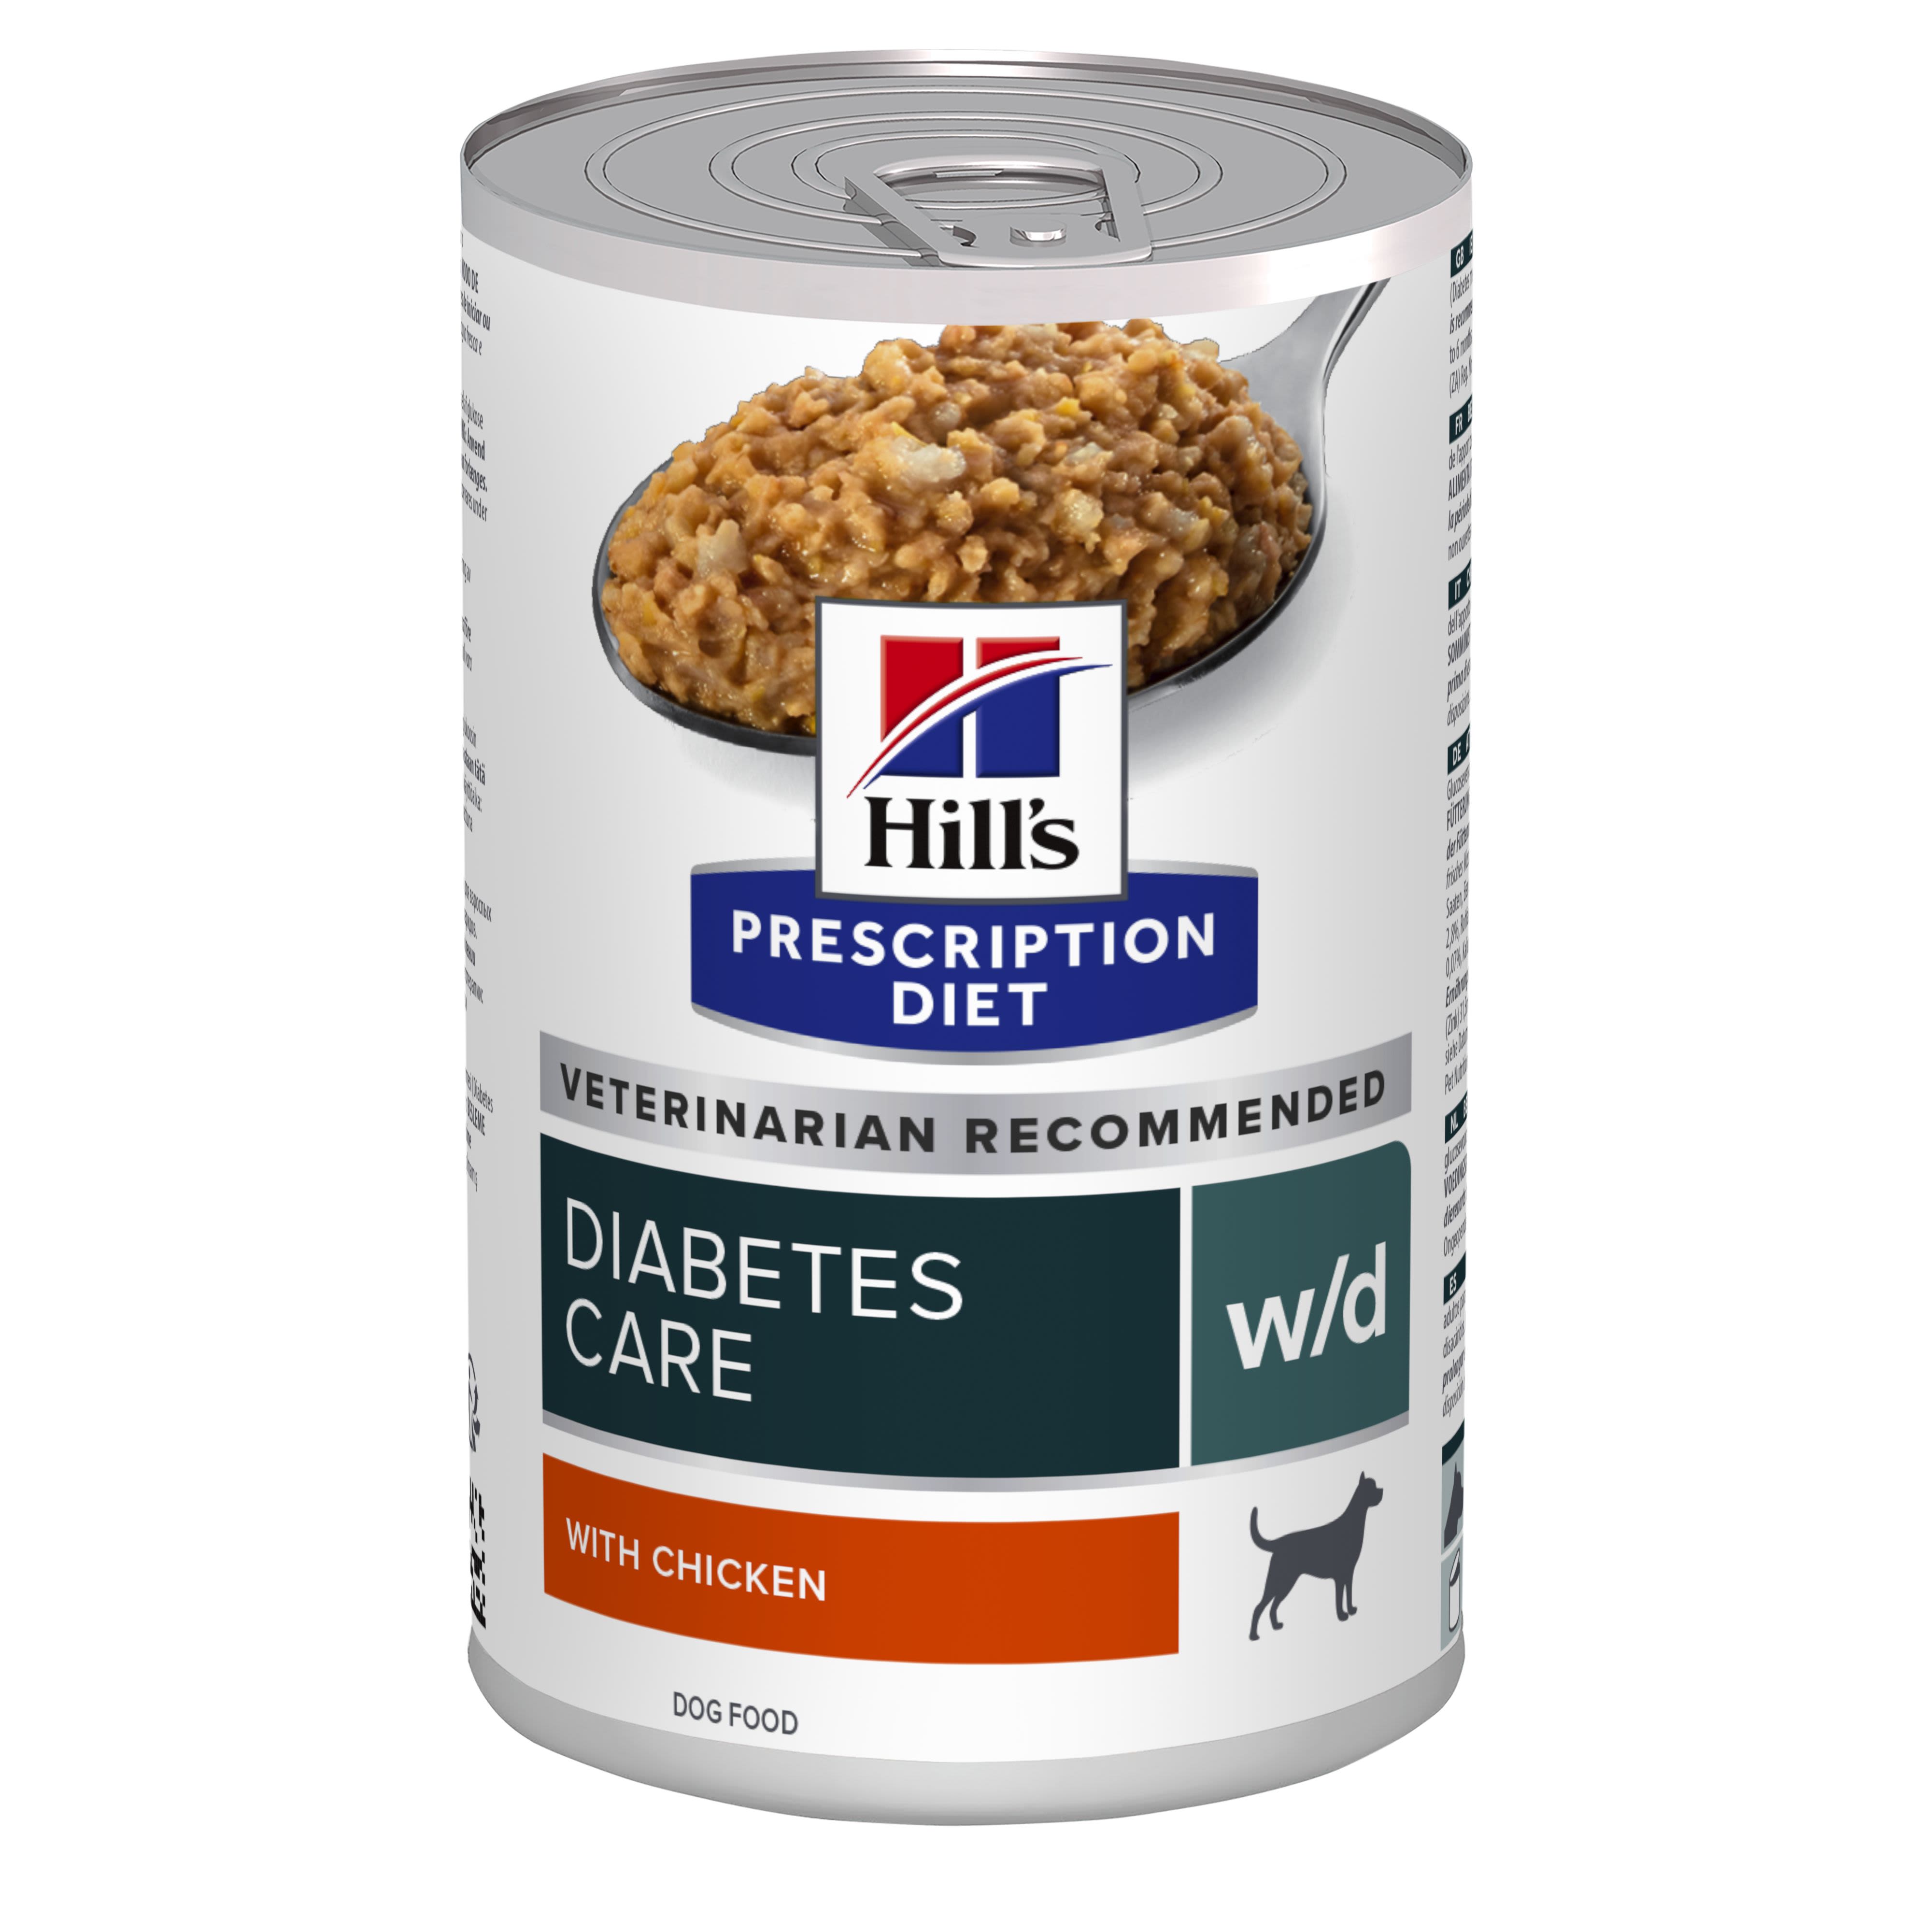 Hills Prescription Diet Canine Wd Medicanimal pertaining to Hills Diabetic Dog Food